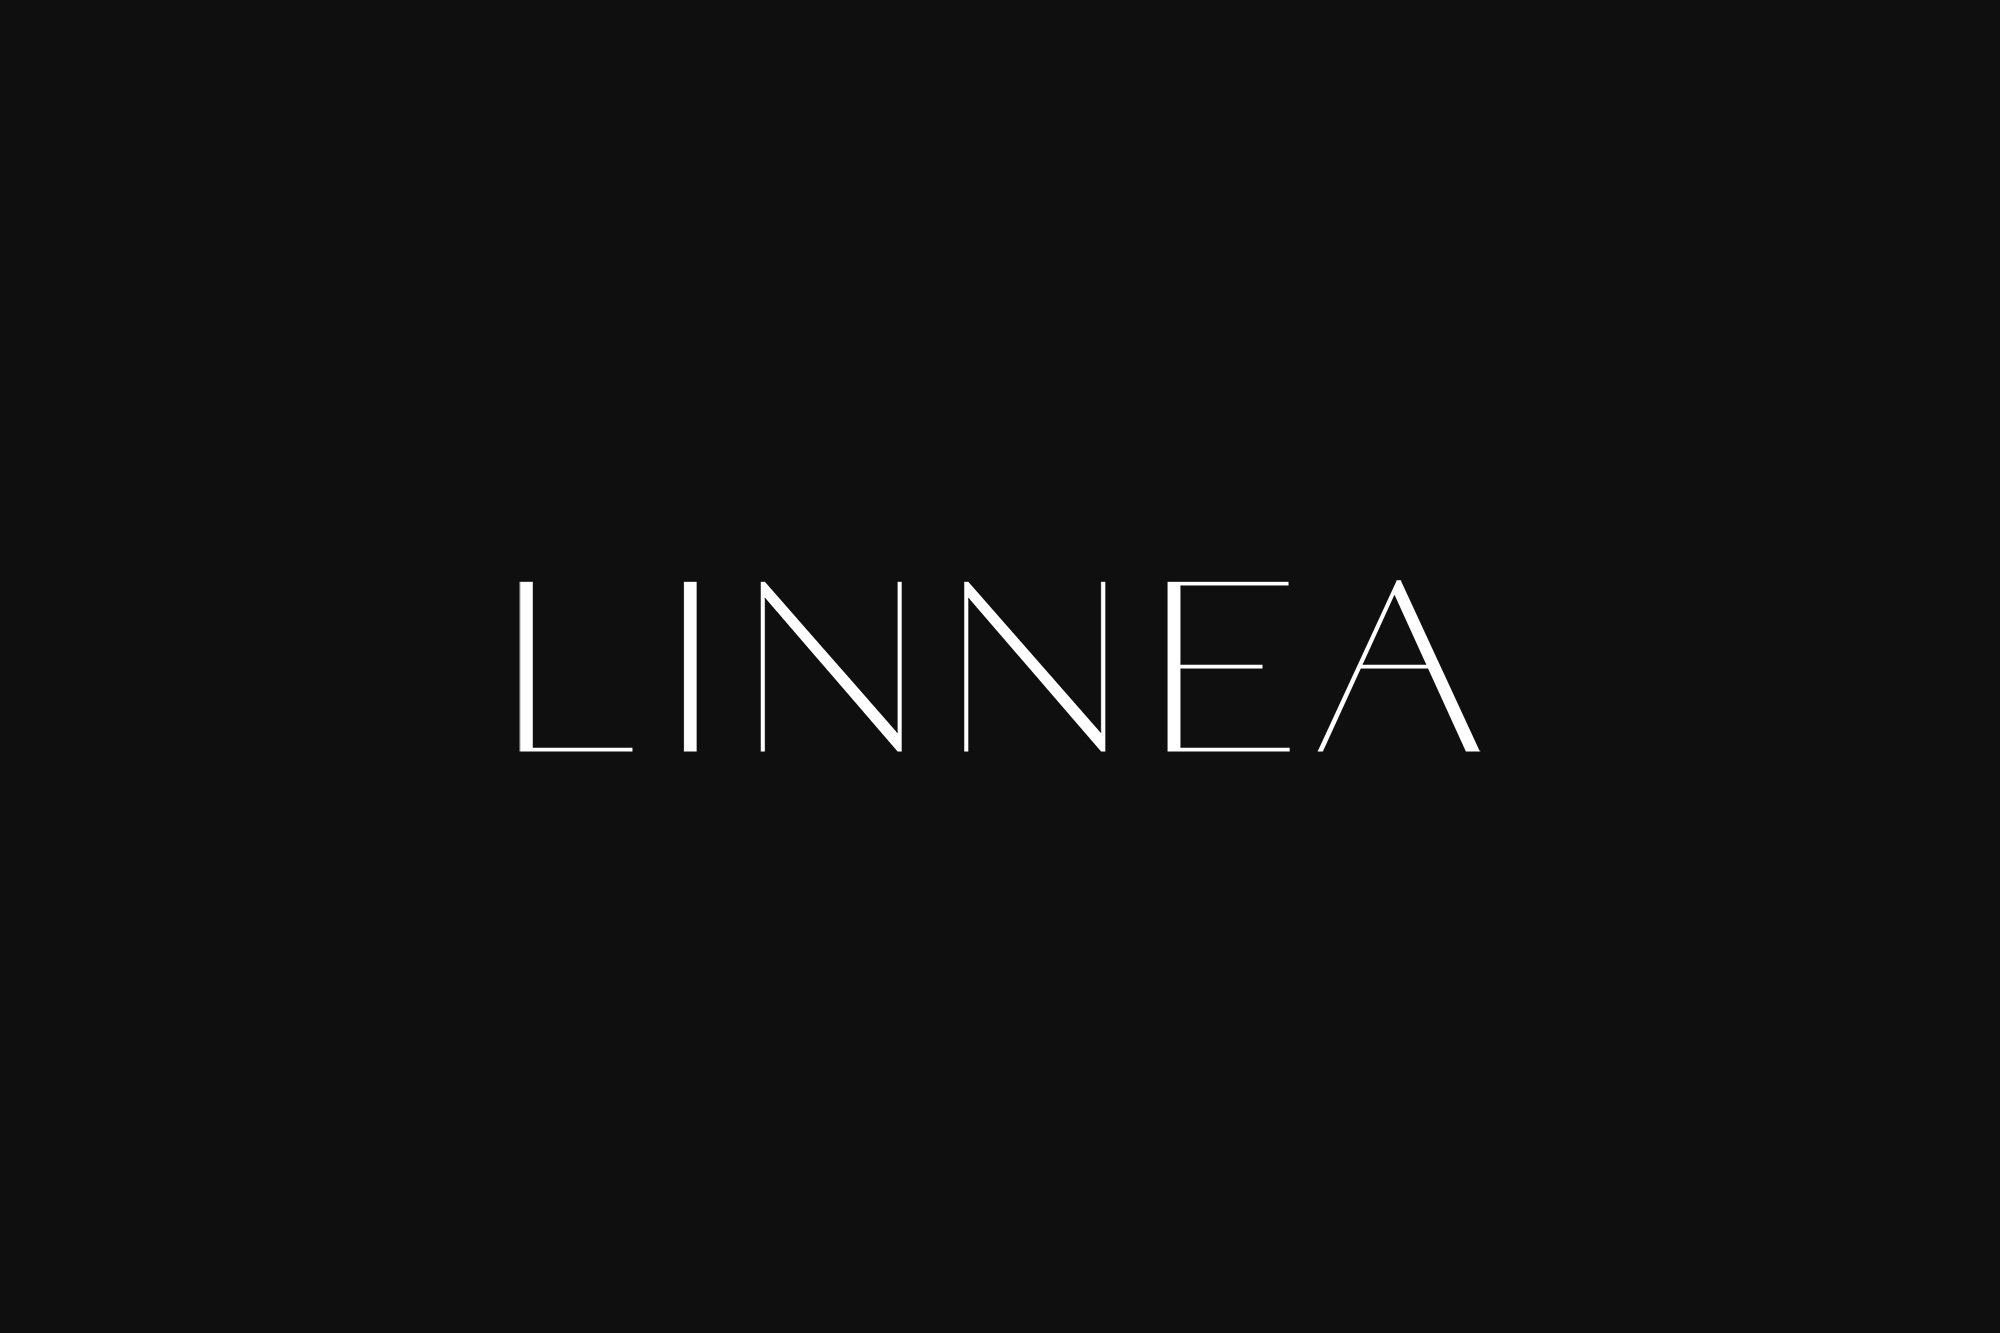 Linnea Design — Co Author